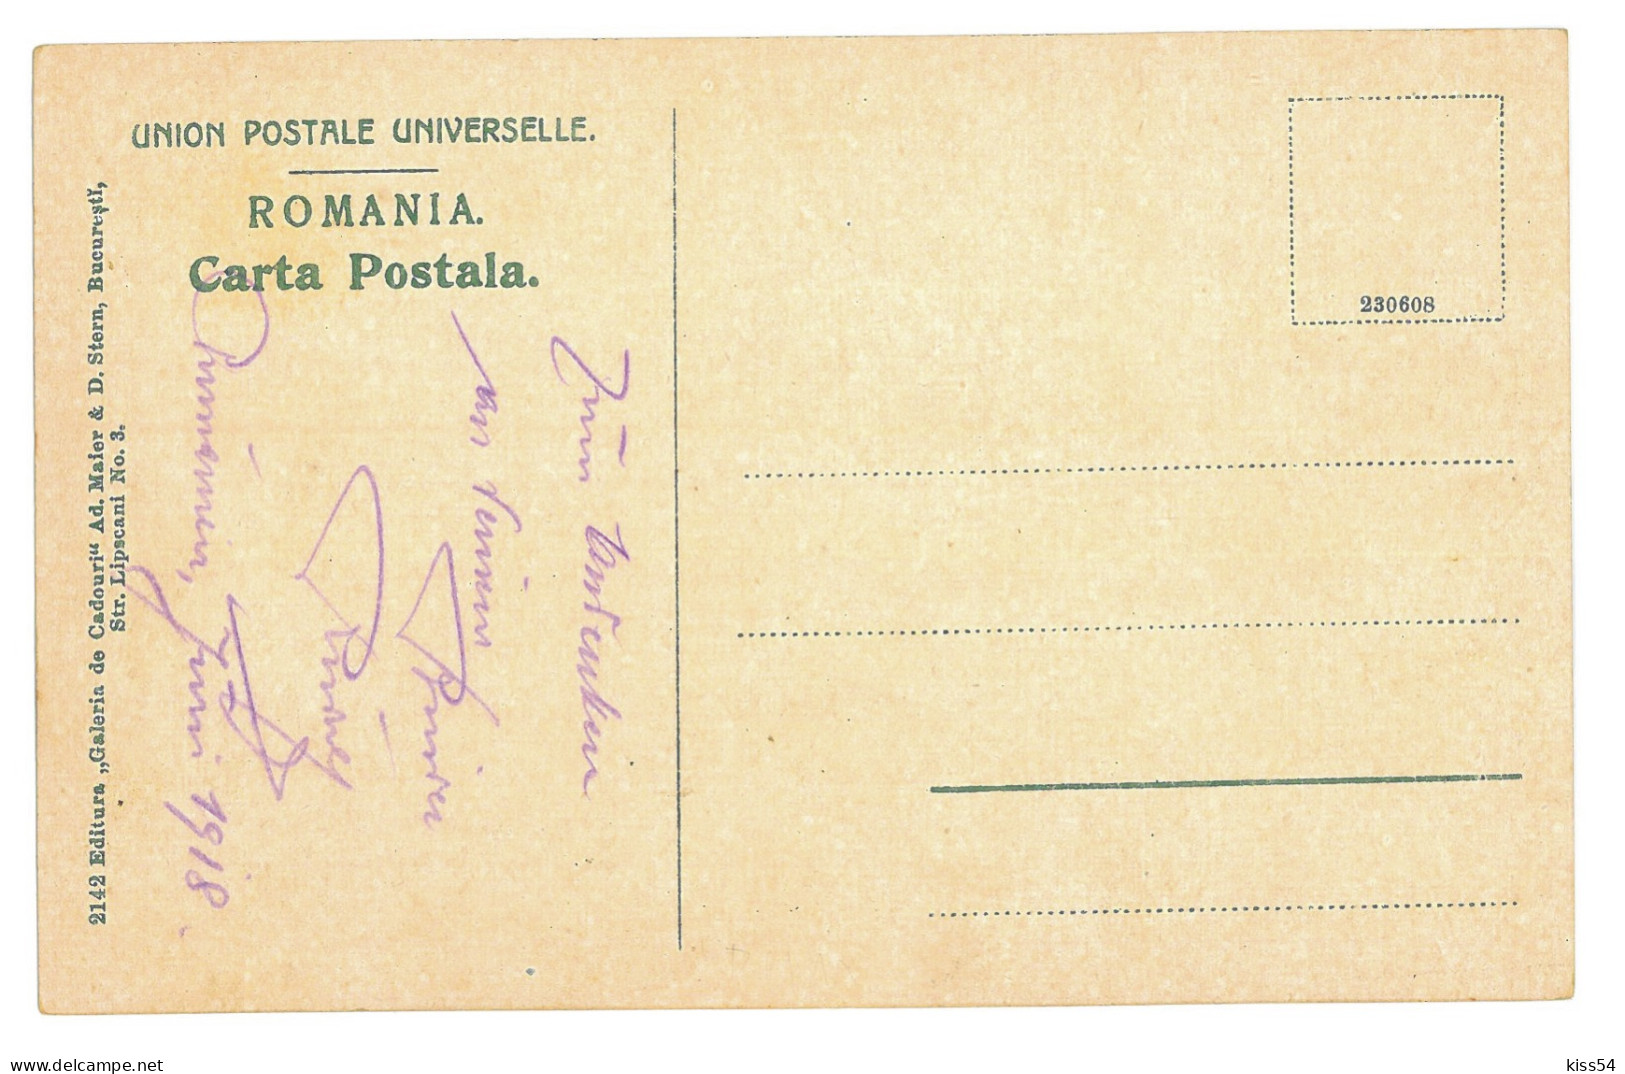 RO 06 - 16272 CONSTANTA, Casino, Romania - Old Postcard - Unused - 1918 - Romania